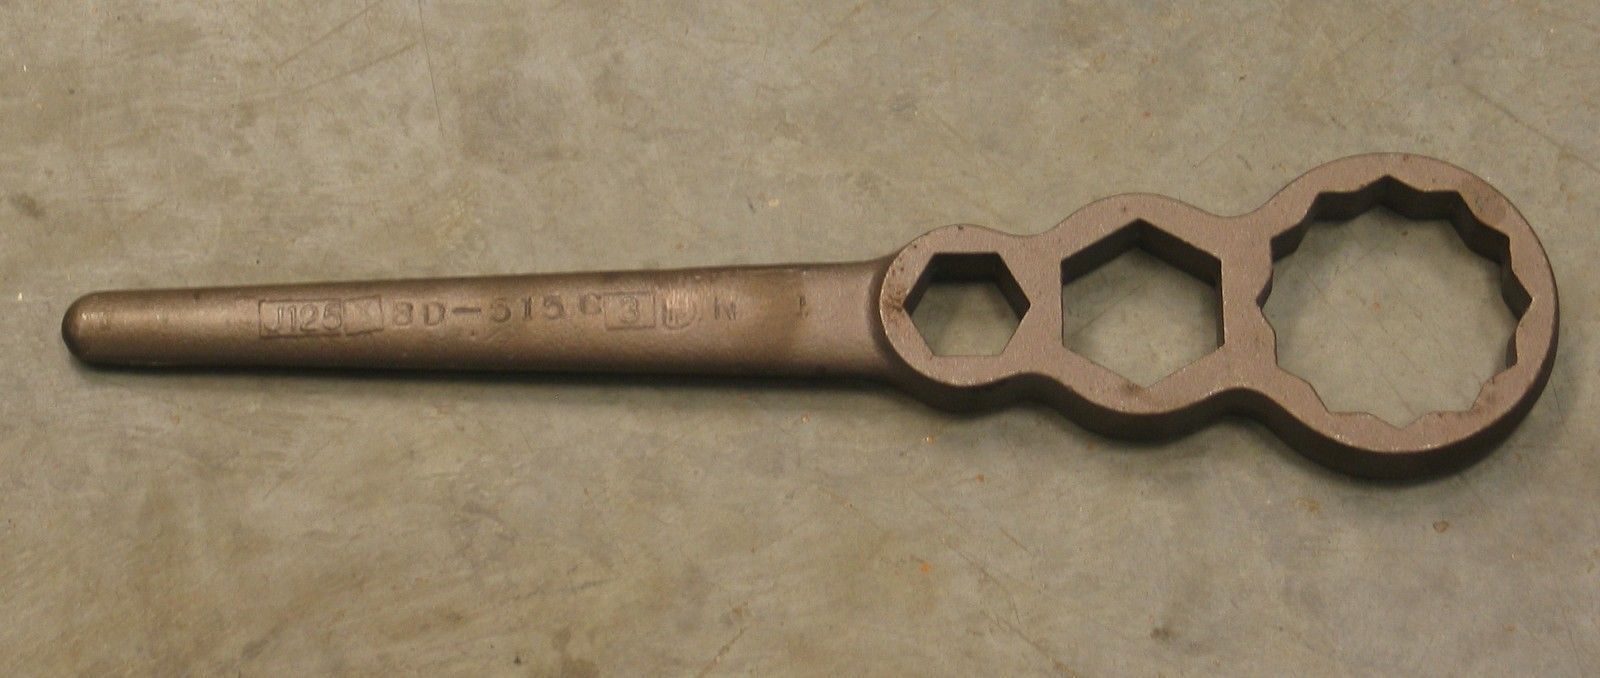 RELS / Winona Van Norman 24515 Arbor Nut Wrench for Brake Lathe Service Tool